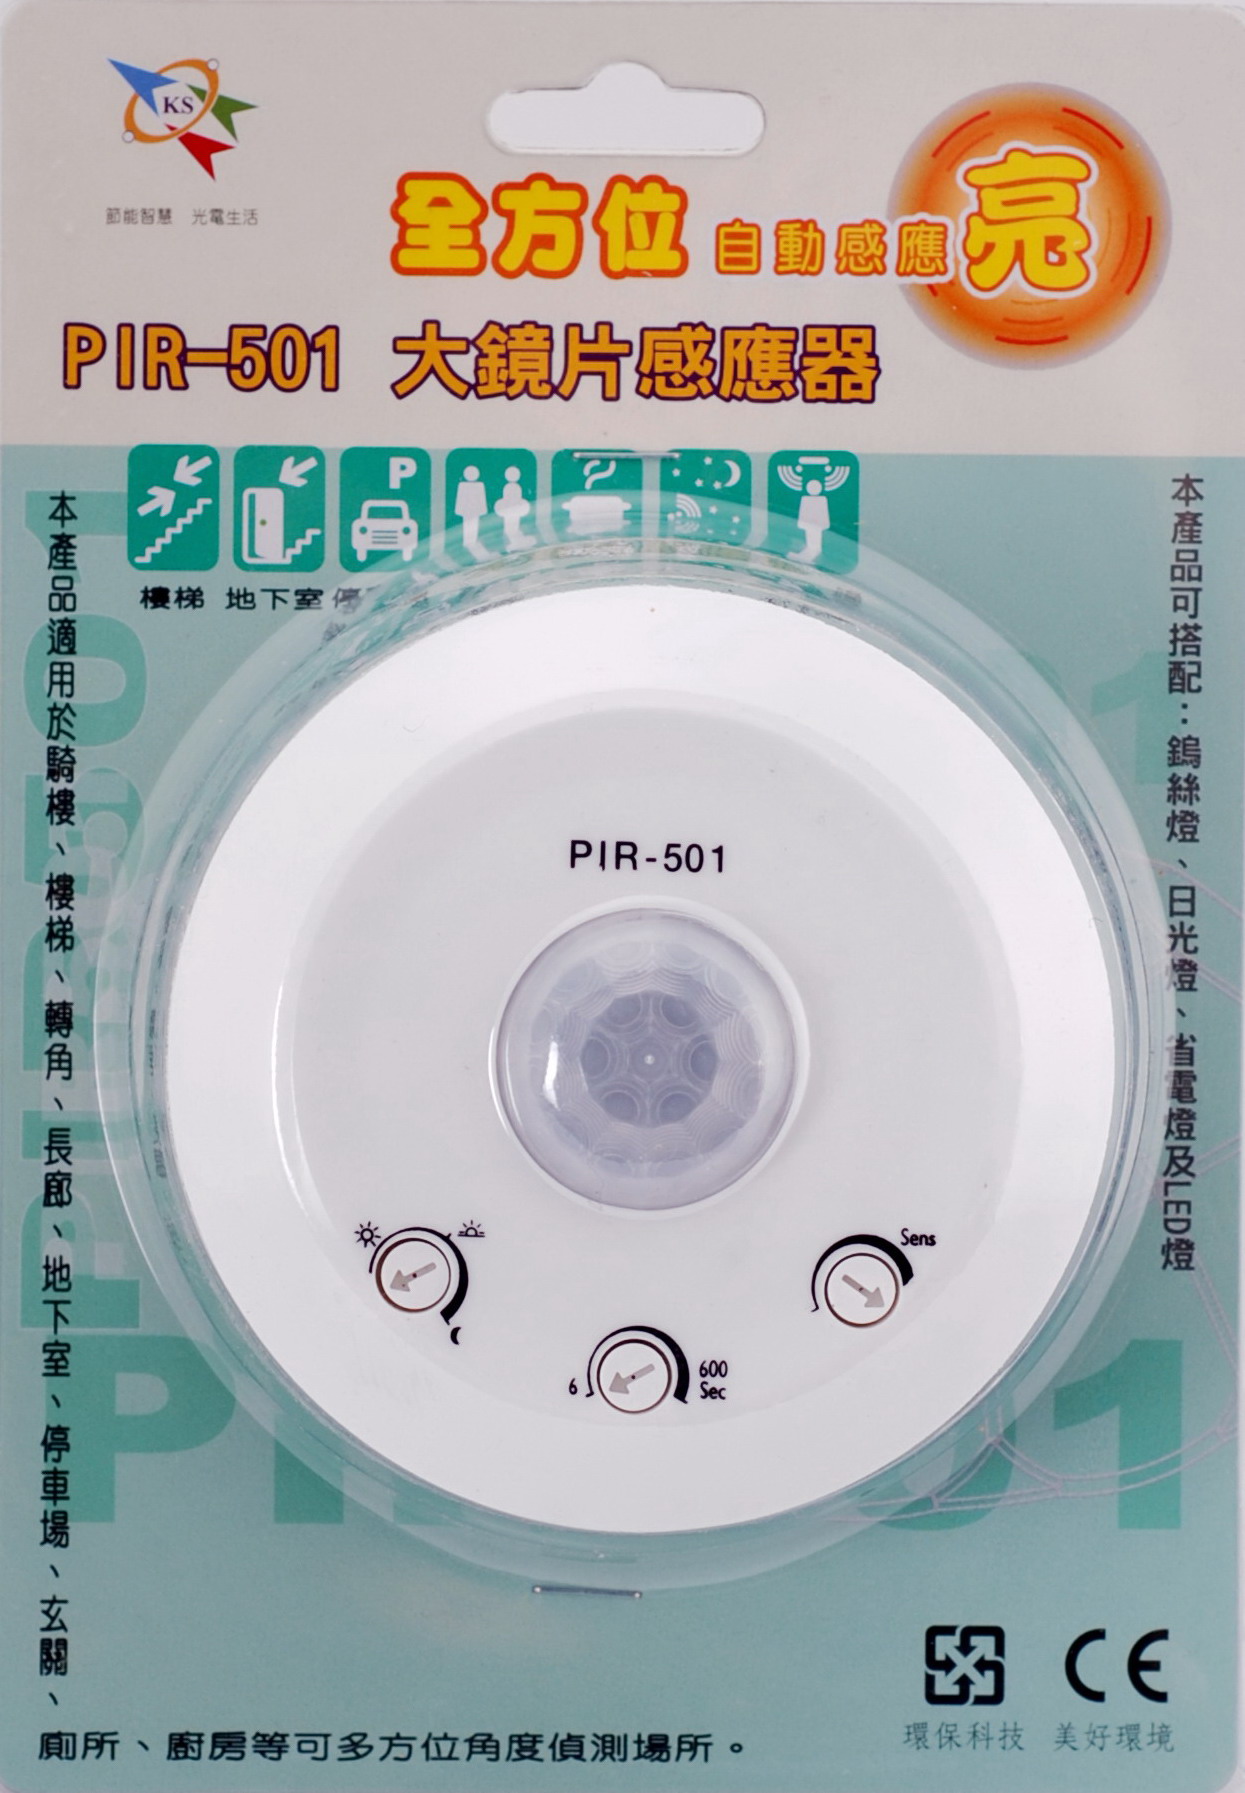 PIR-501 PIR Motion Sensor, Large Lens Sensor